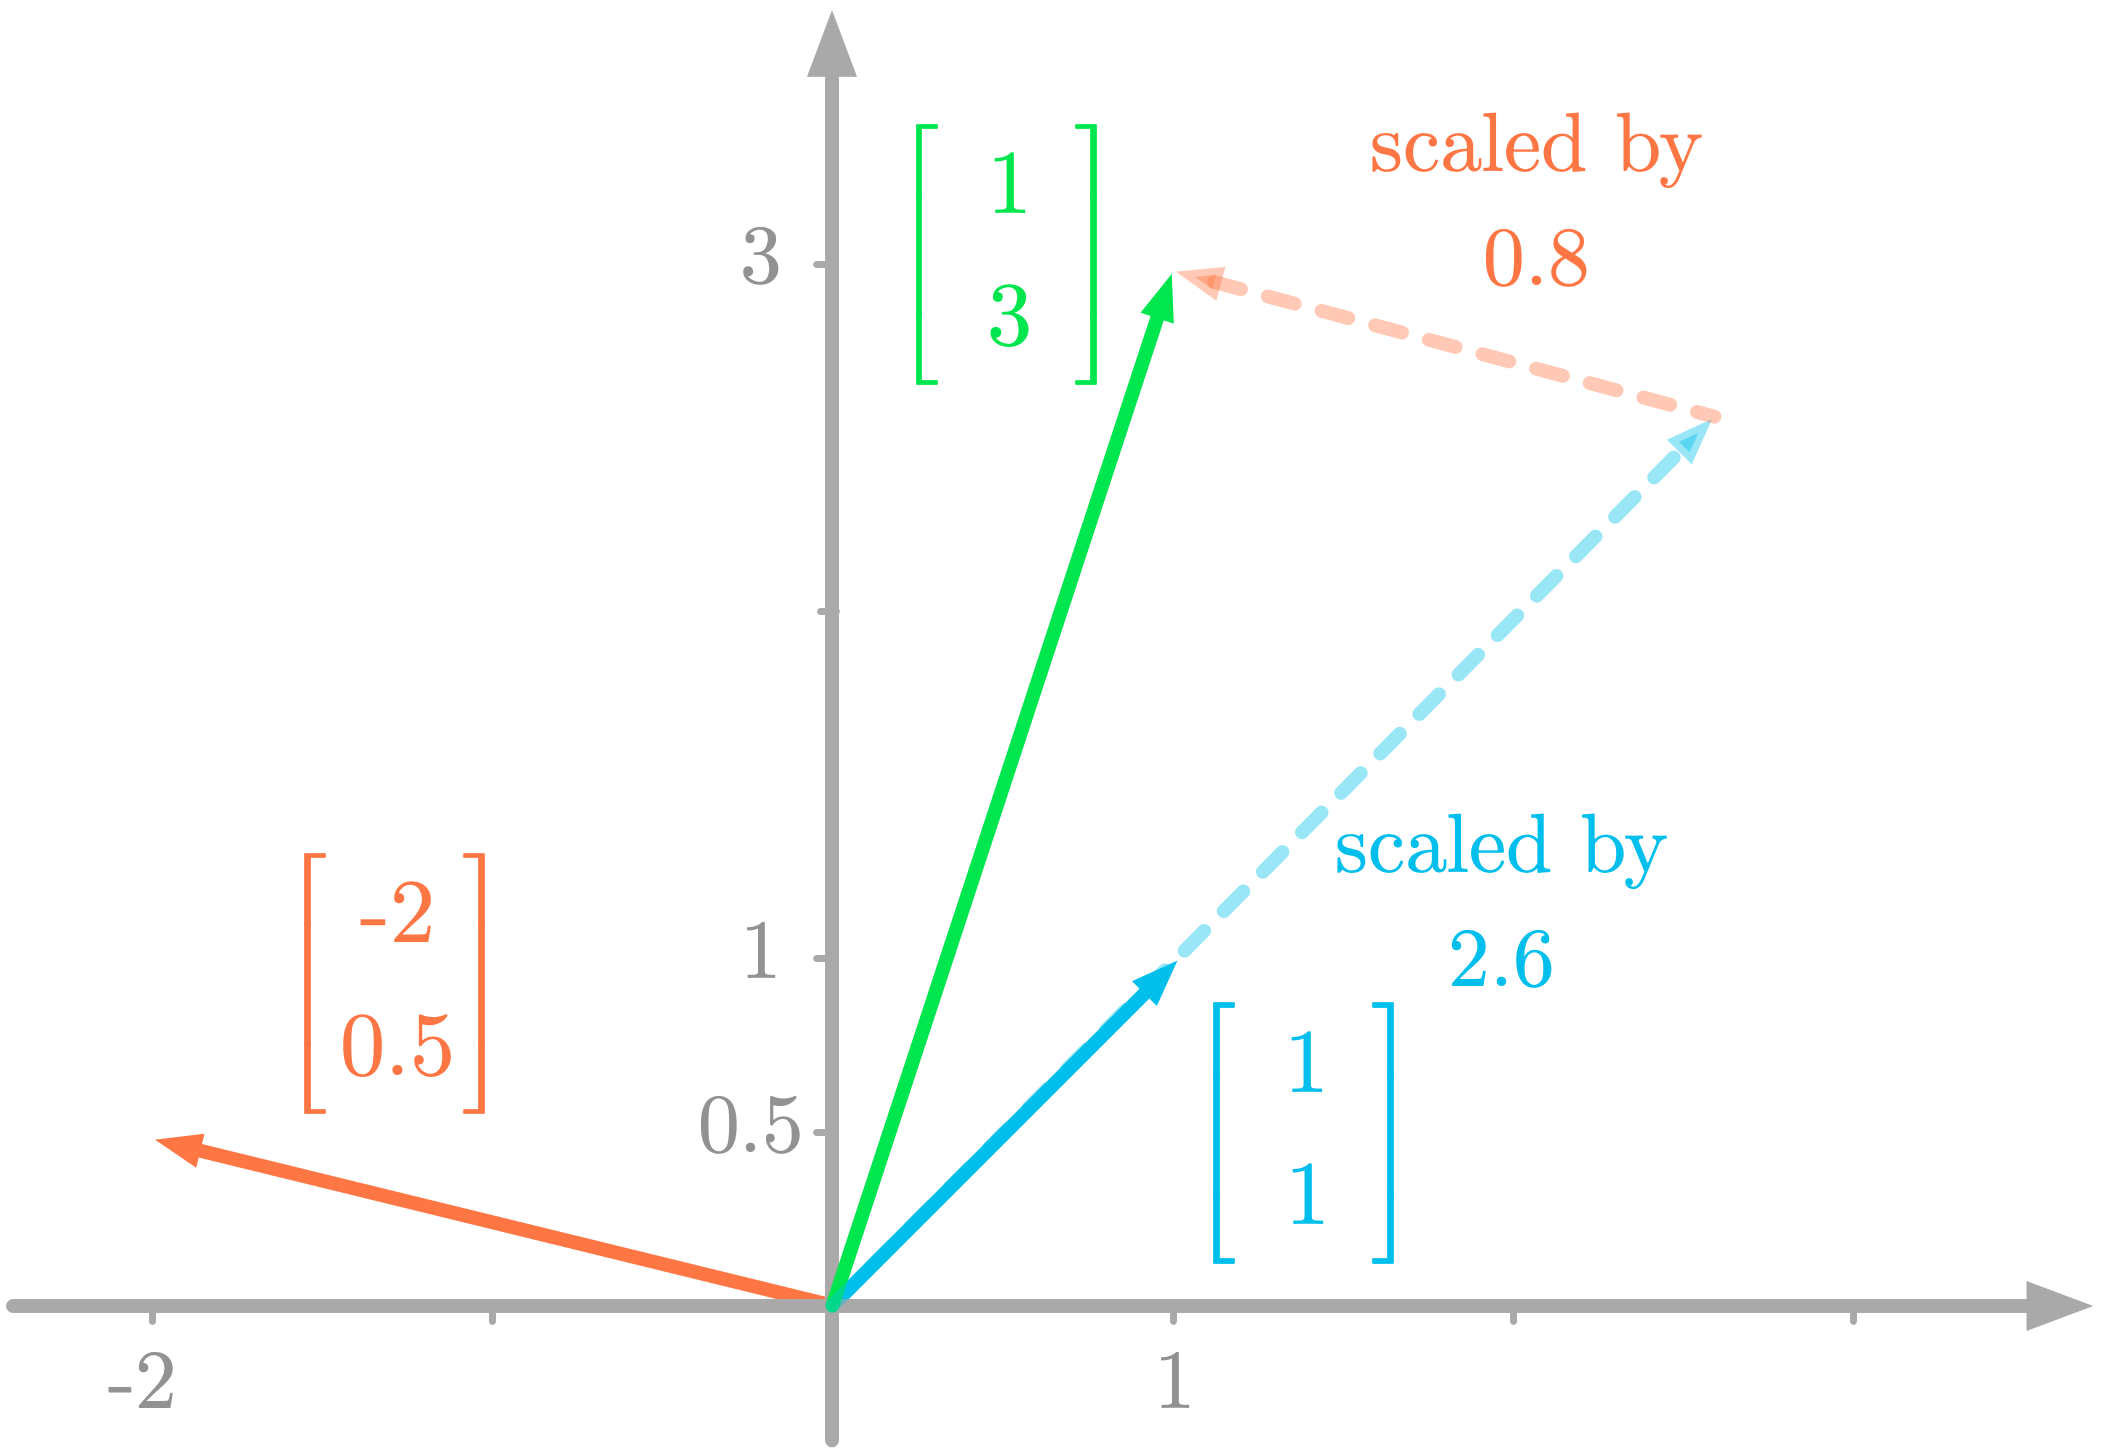 a visual representation of data using line segments